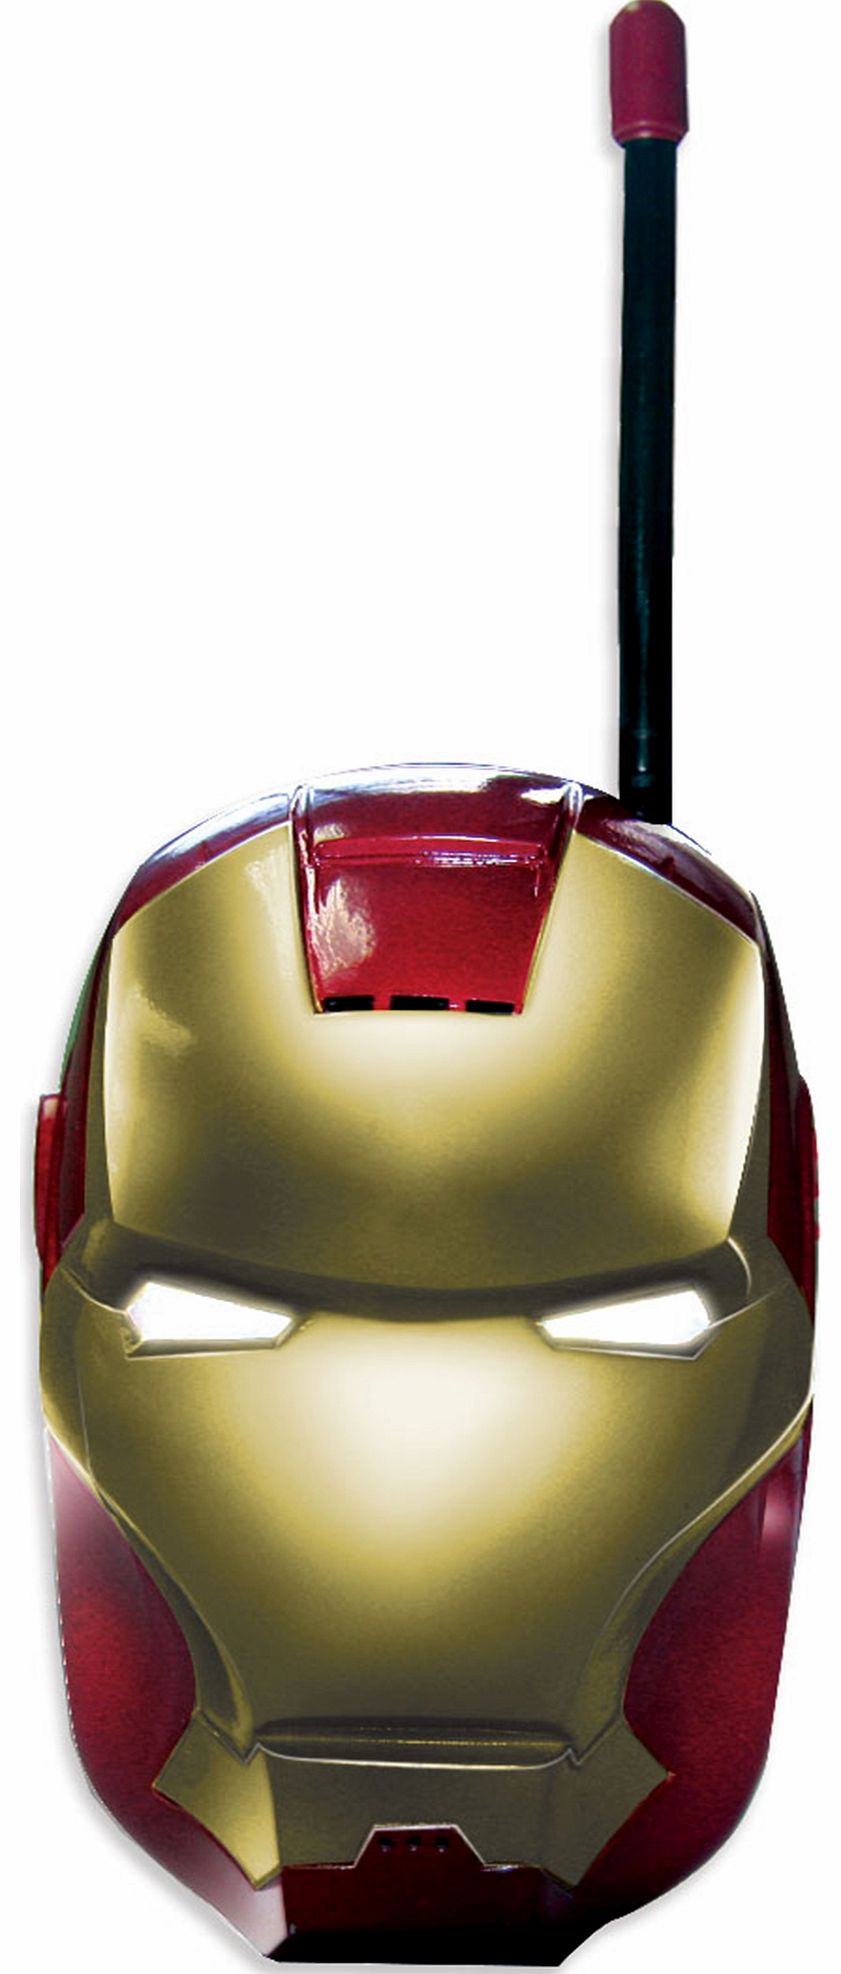 IMC Toys Iron Man Walkie Talkie